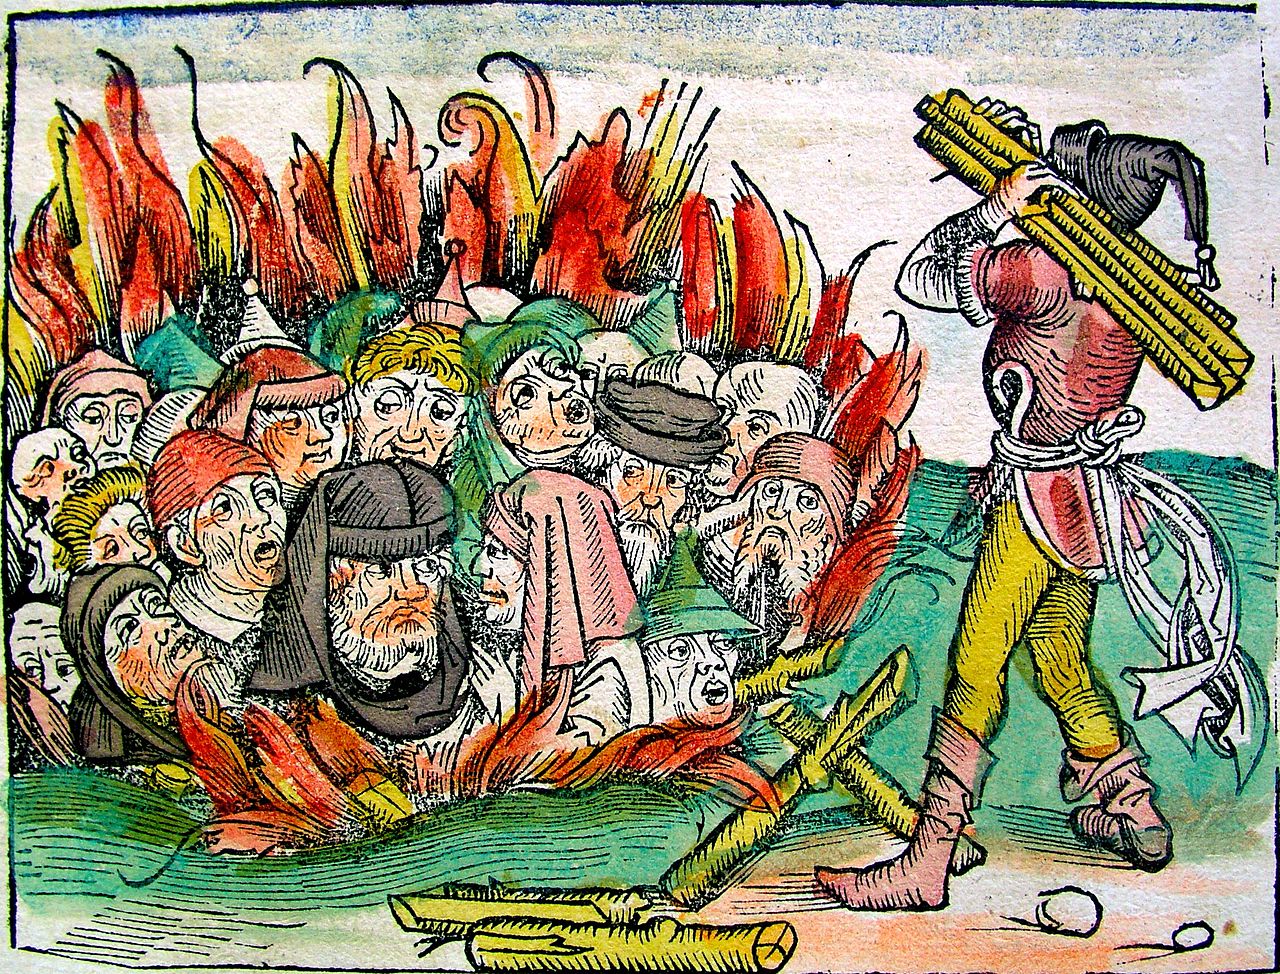 https://en.wikipedia.org/wiki/History_of_the_Jews_in_Germany#/media/File:Burning_Jews.jpg